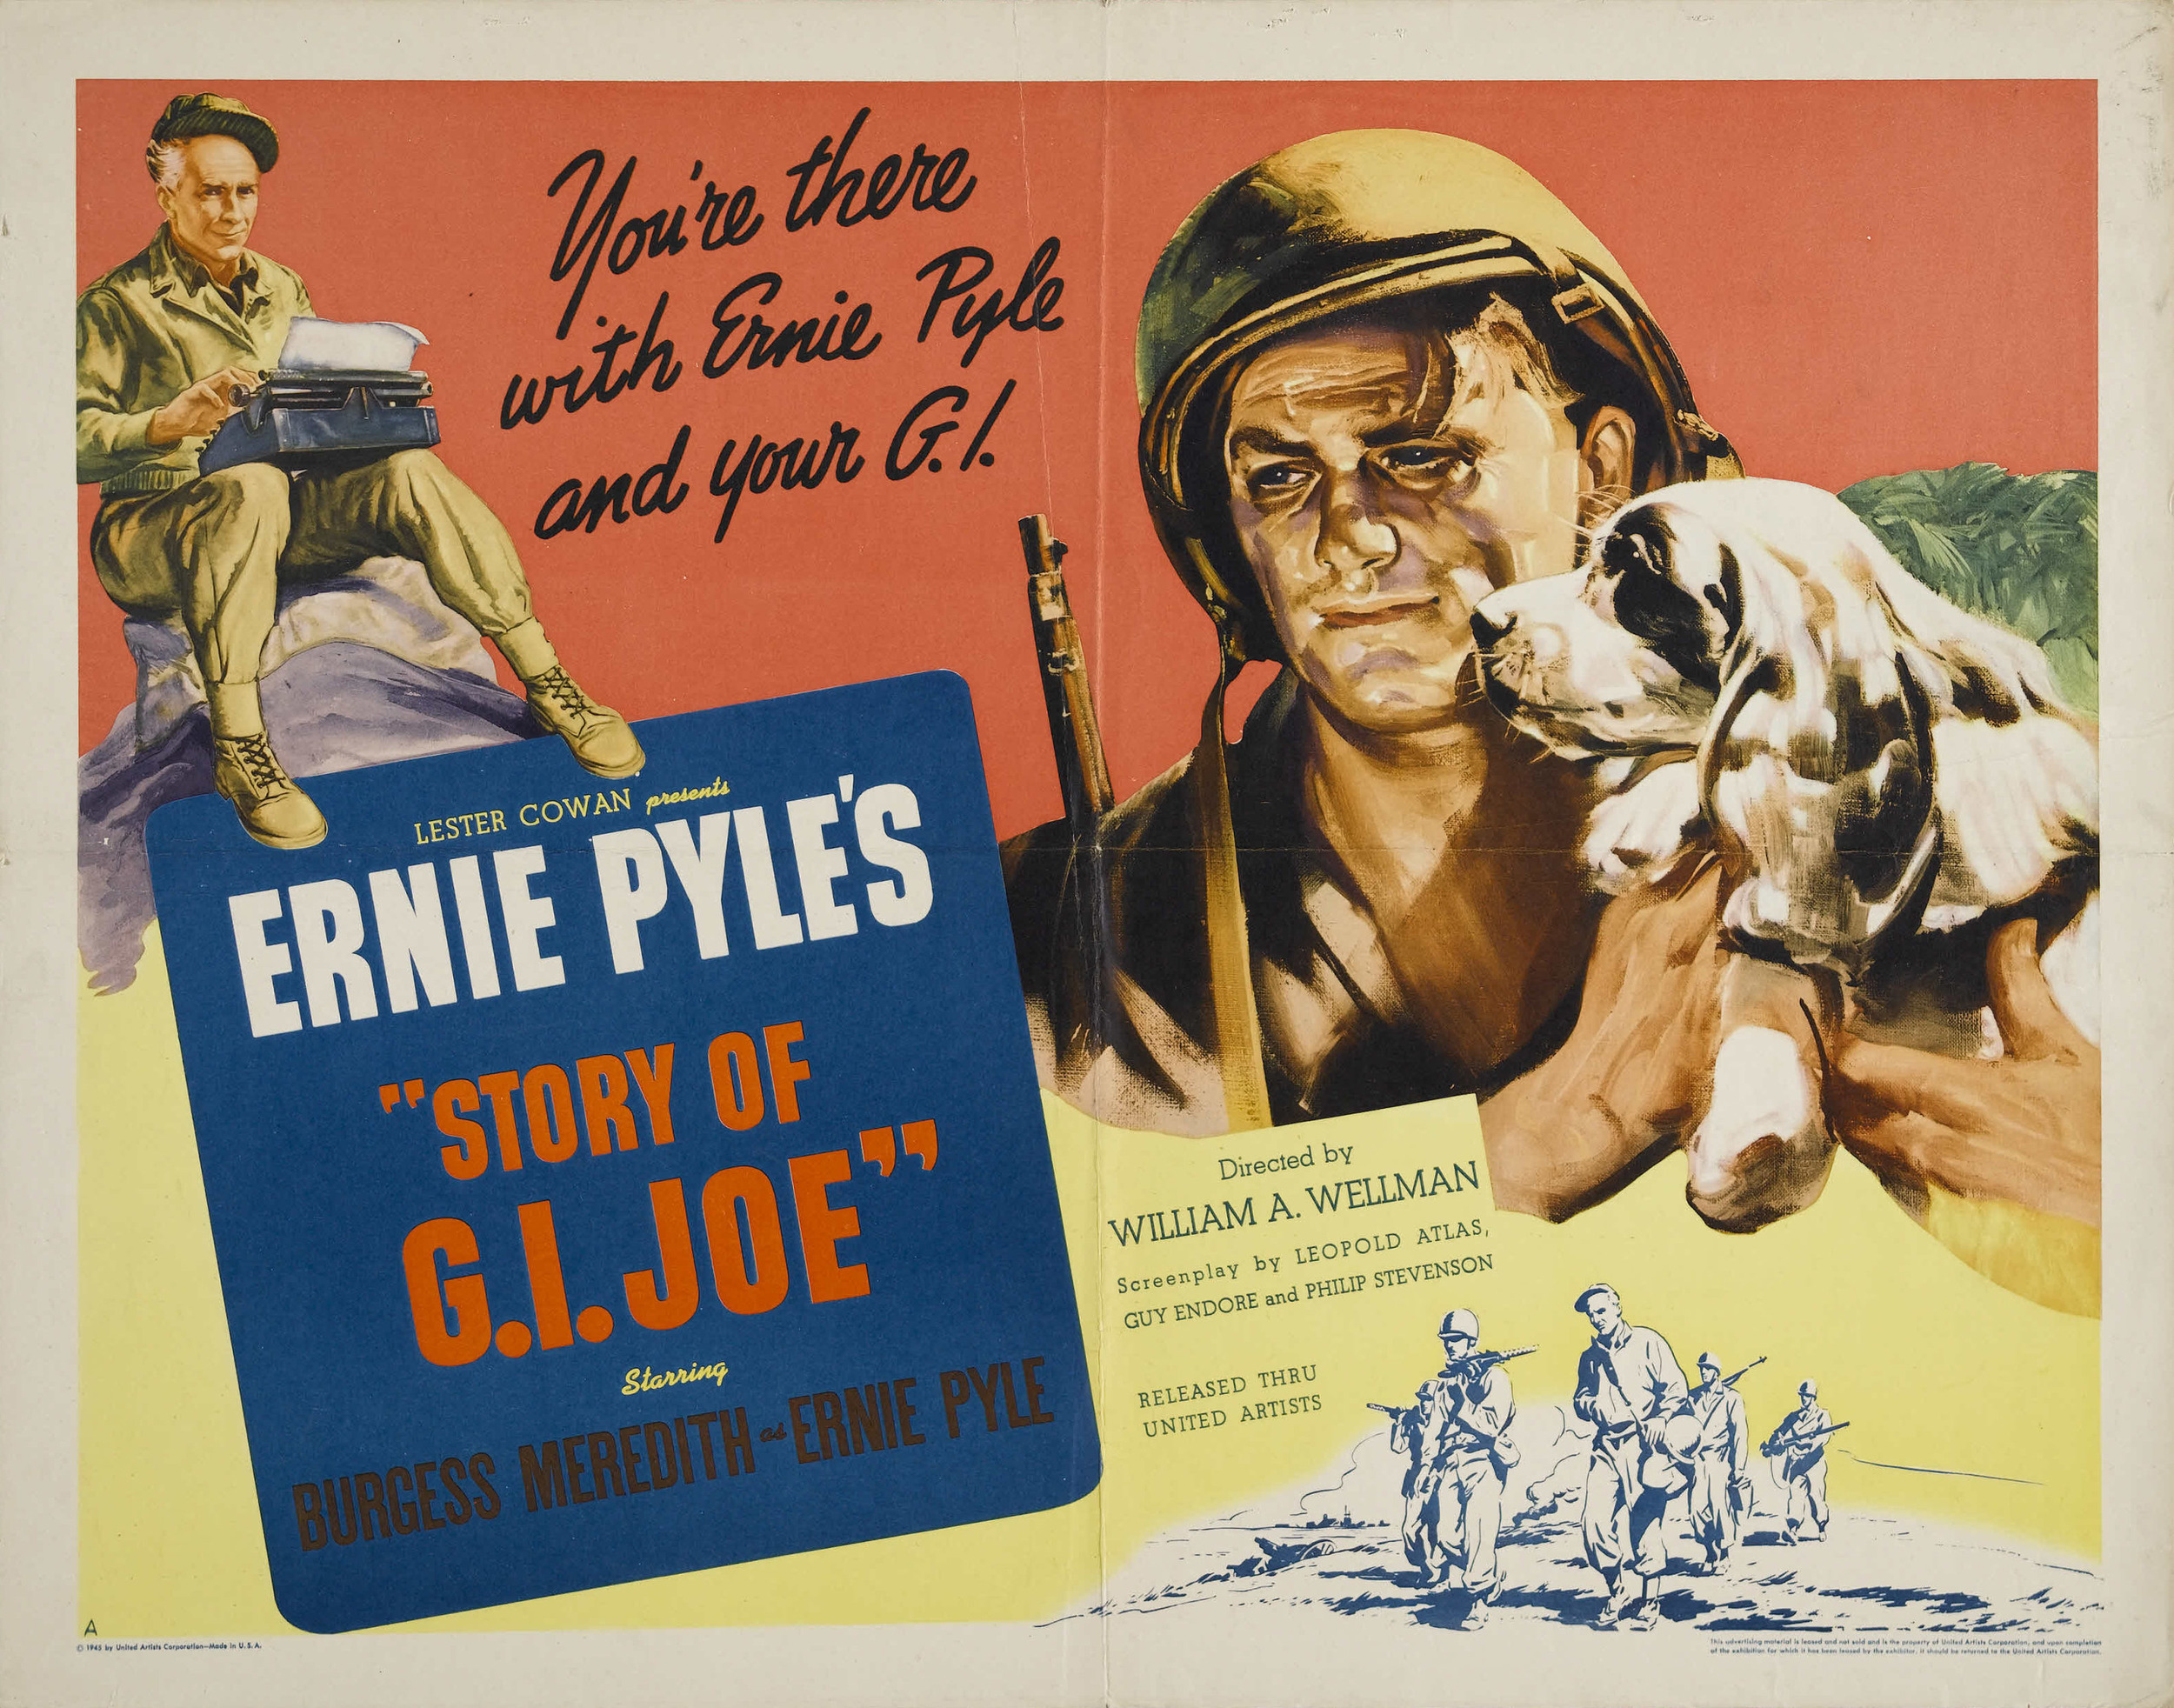 Mega Sized Movie Poster Image for Story of G.I. Joe (#3 of 3)